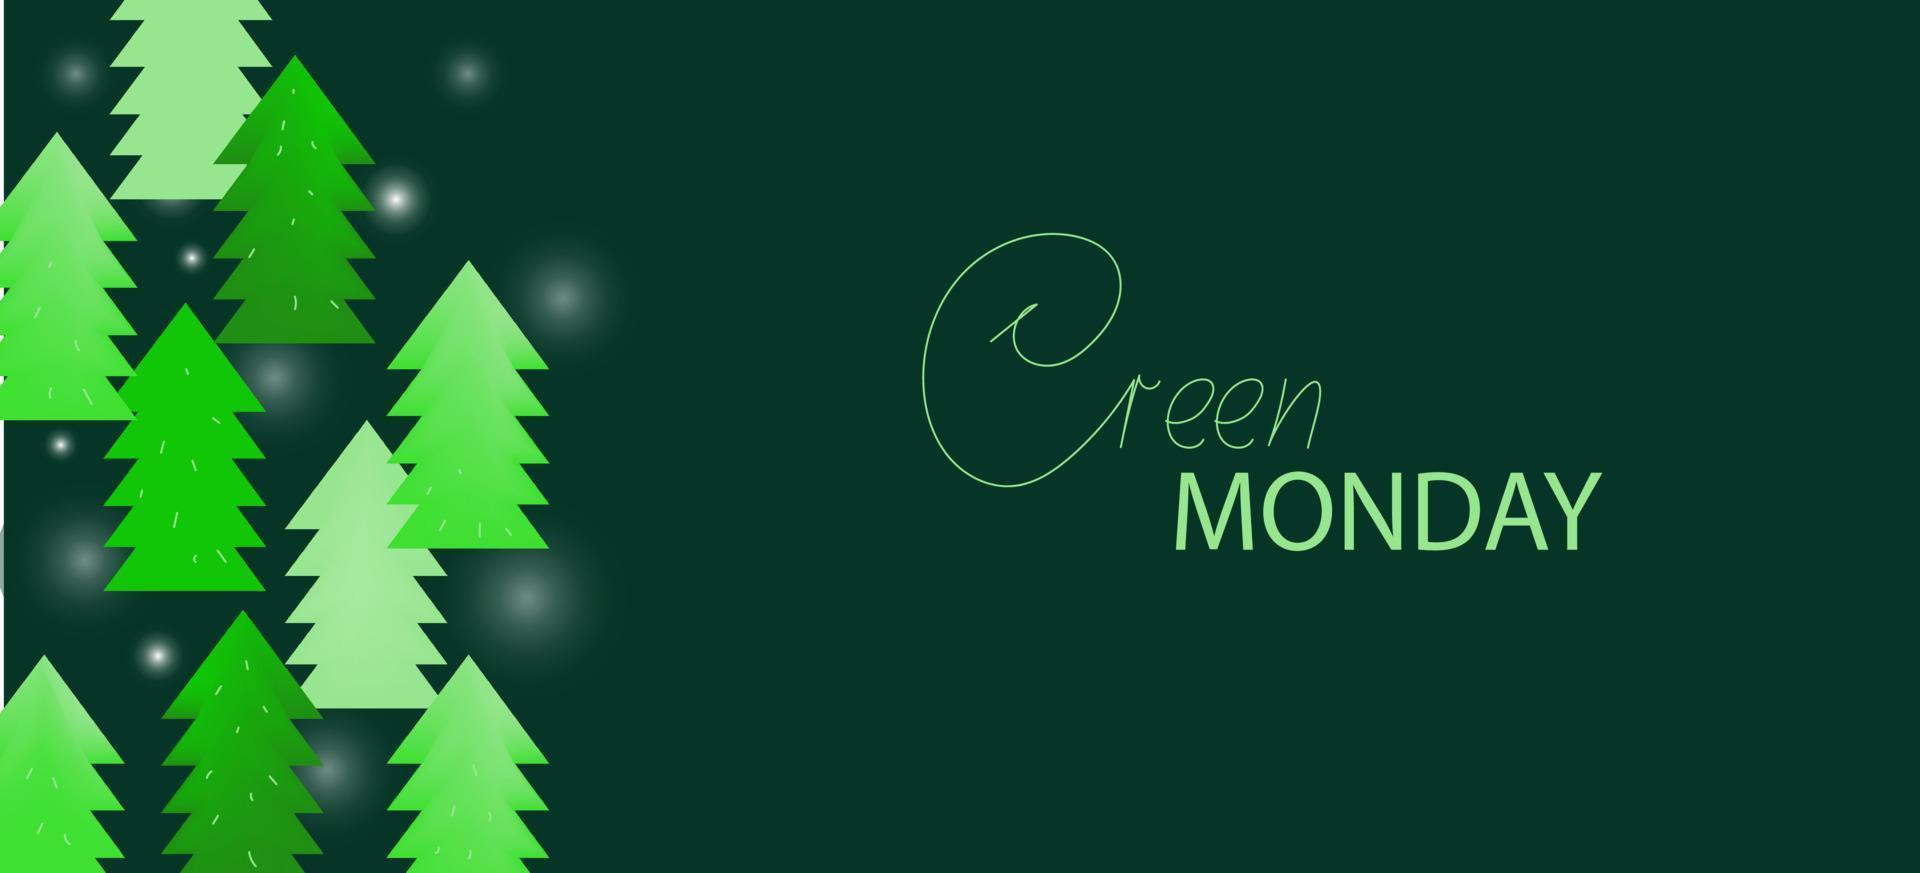 Green monday sale tree background. Vectpr 3d, cartoon illistrationfor banner. vector